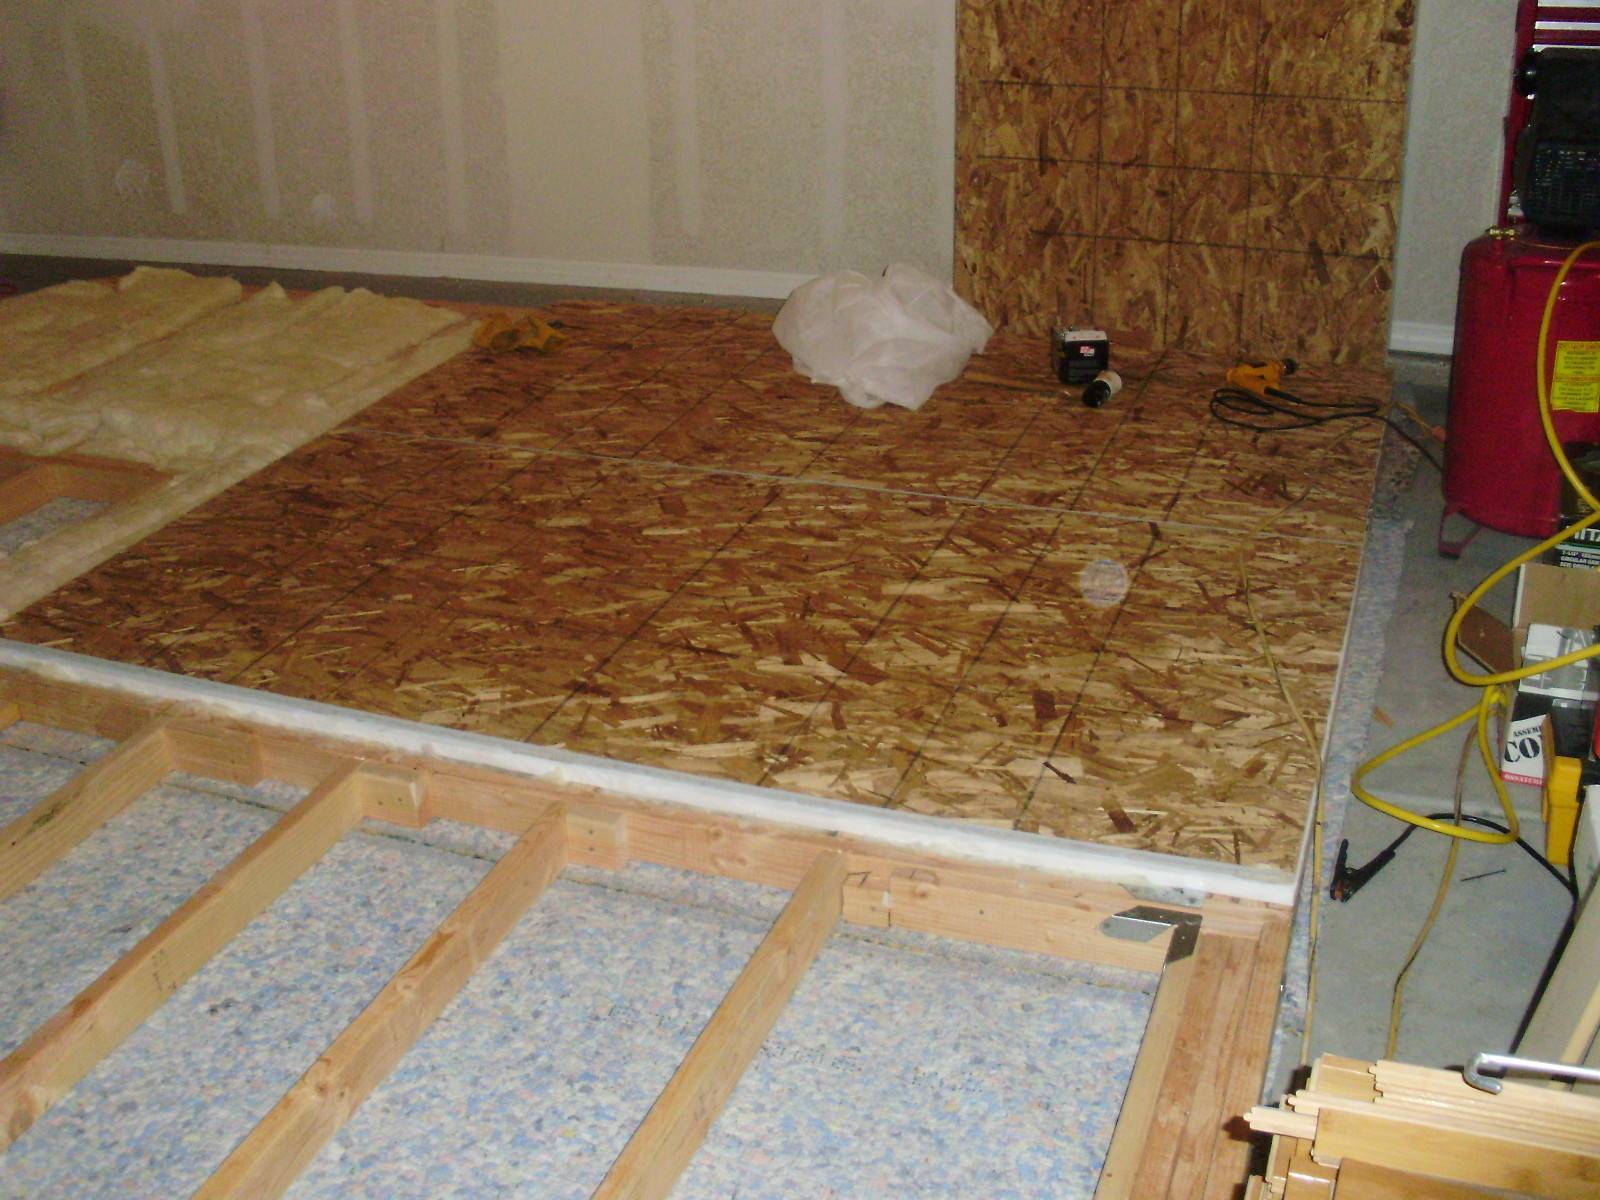 Осб плита на пол: толщина и нужна ли подложка под осб на деревянный пол